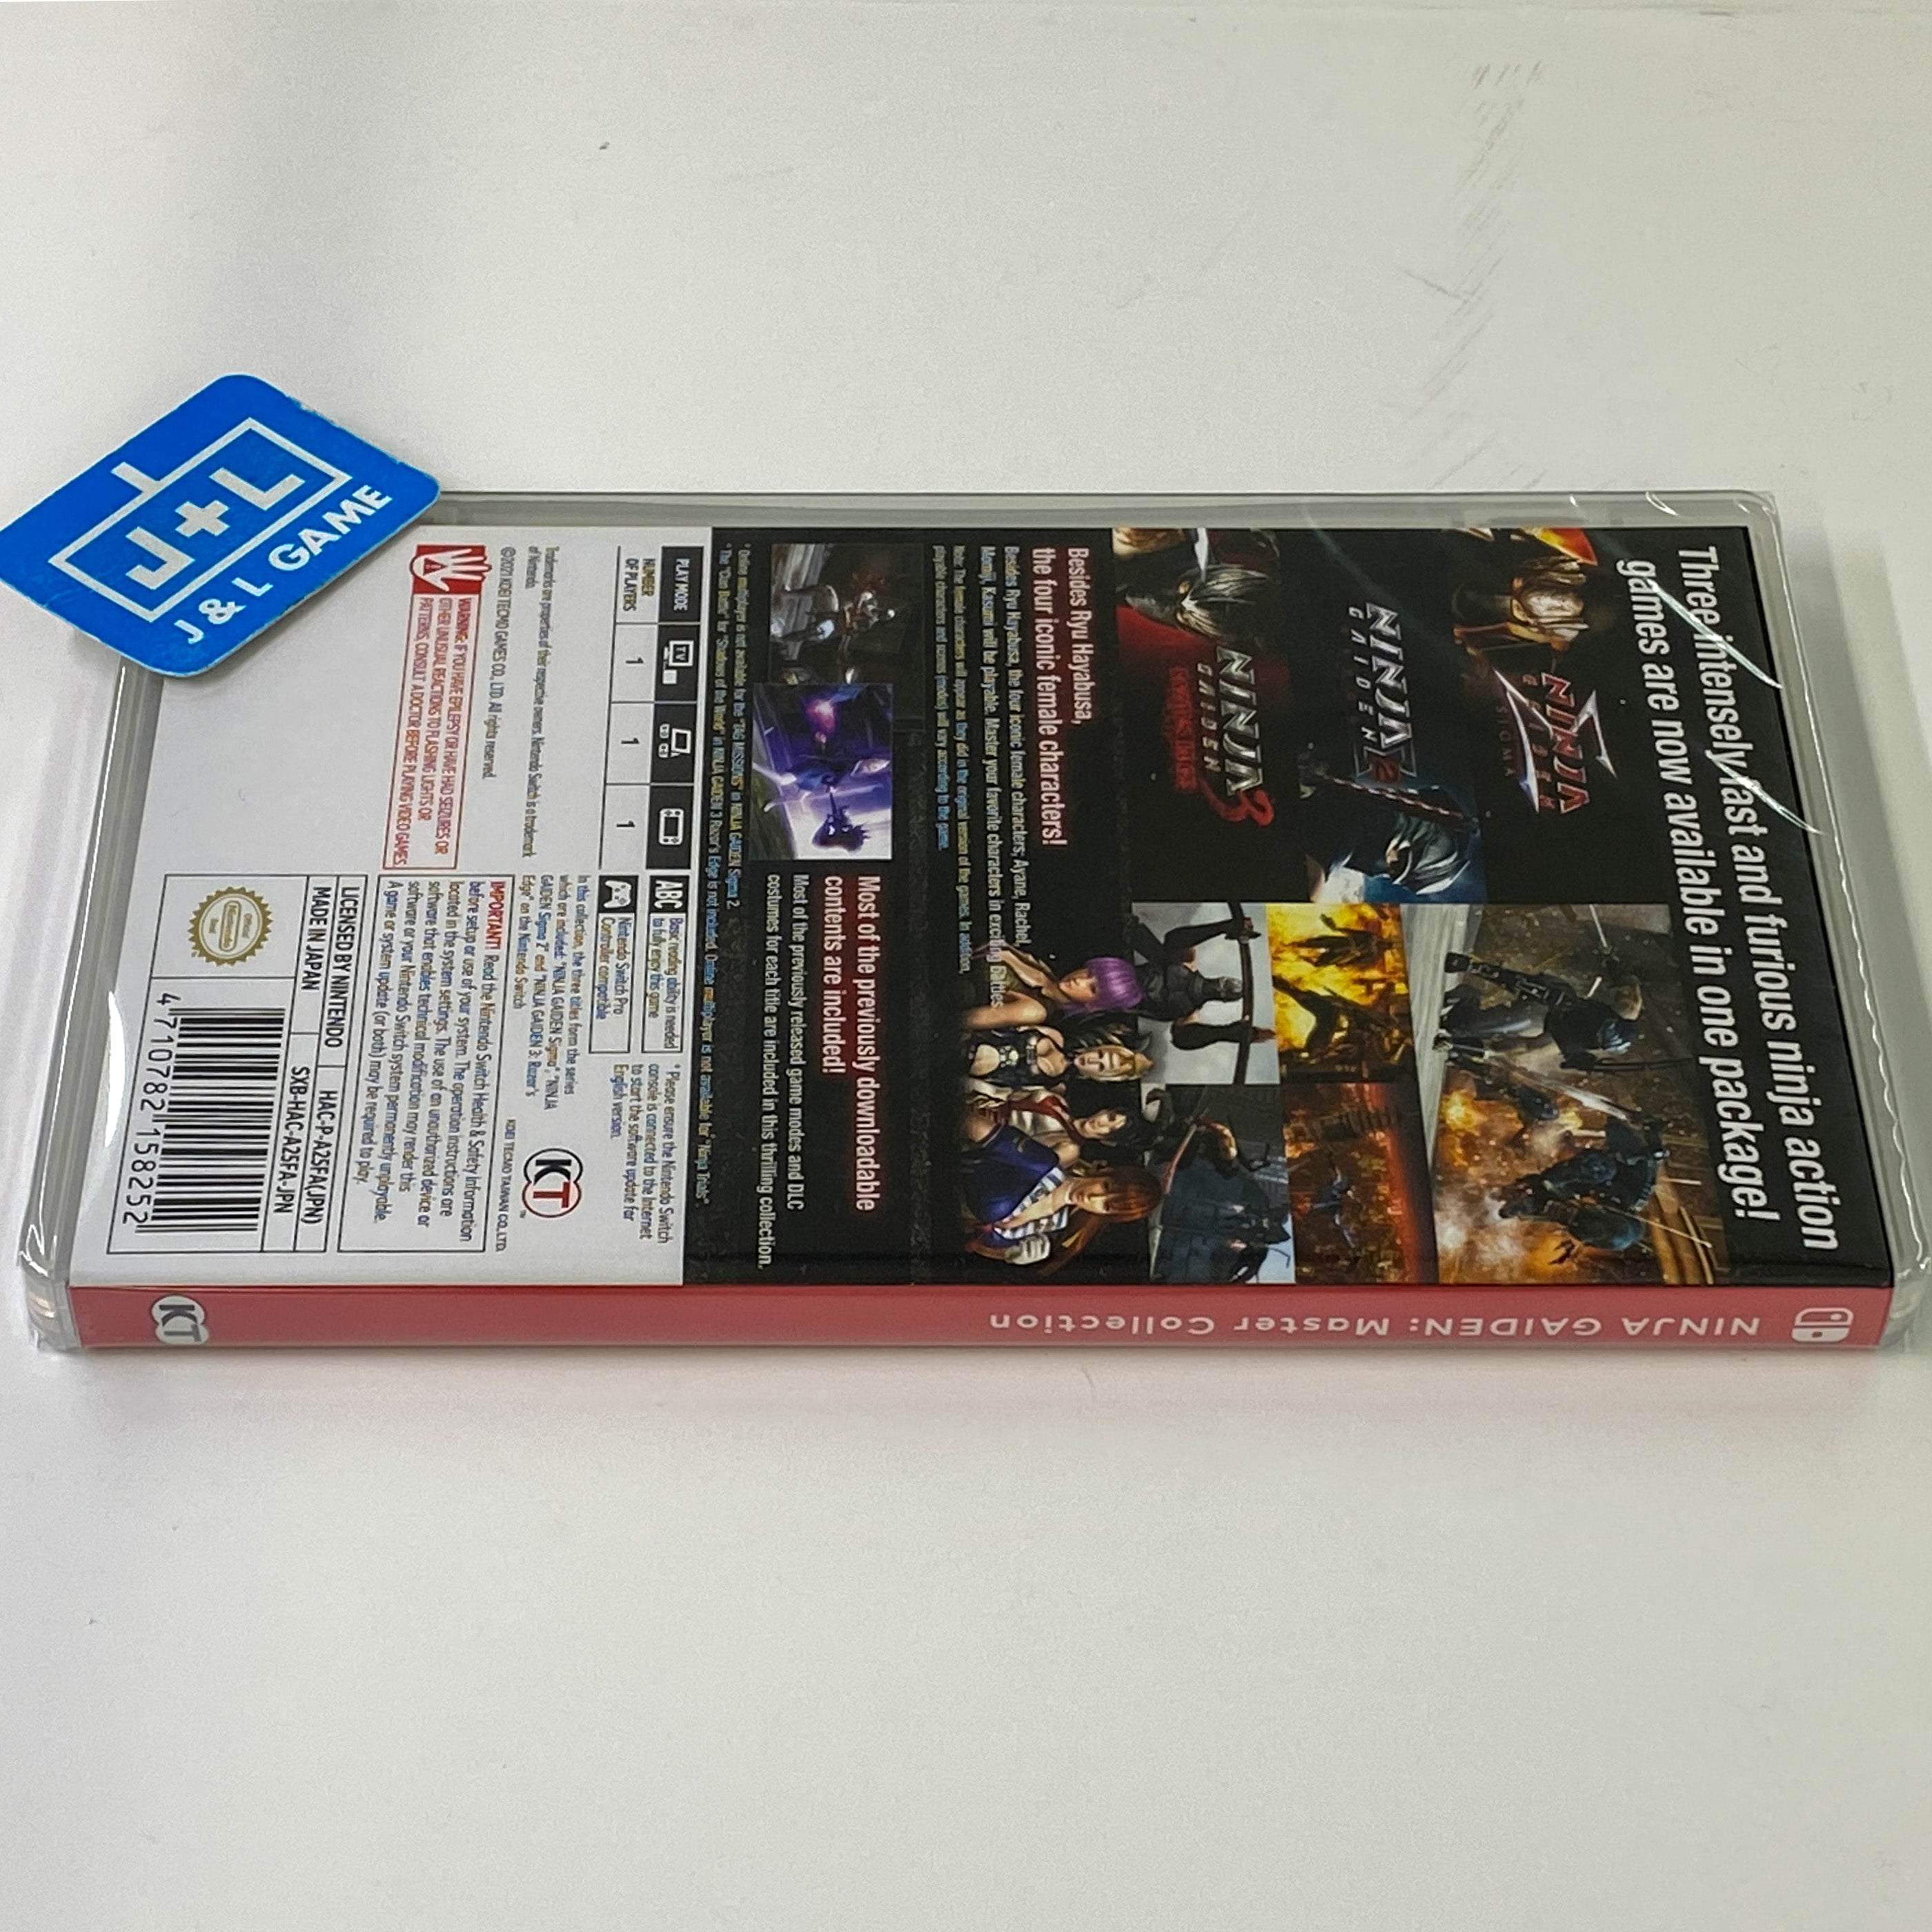 Ninja Gaiden: Master Collection - (NSW) Nintendo Switch (Asia Import) Video Games Koei Tecmo Games   